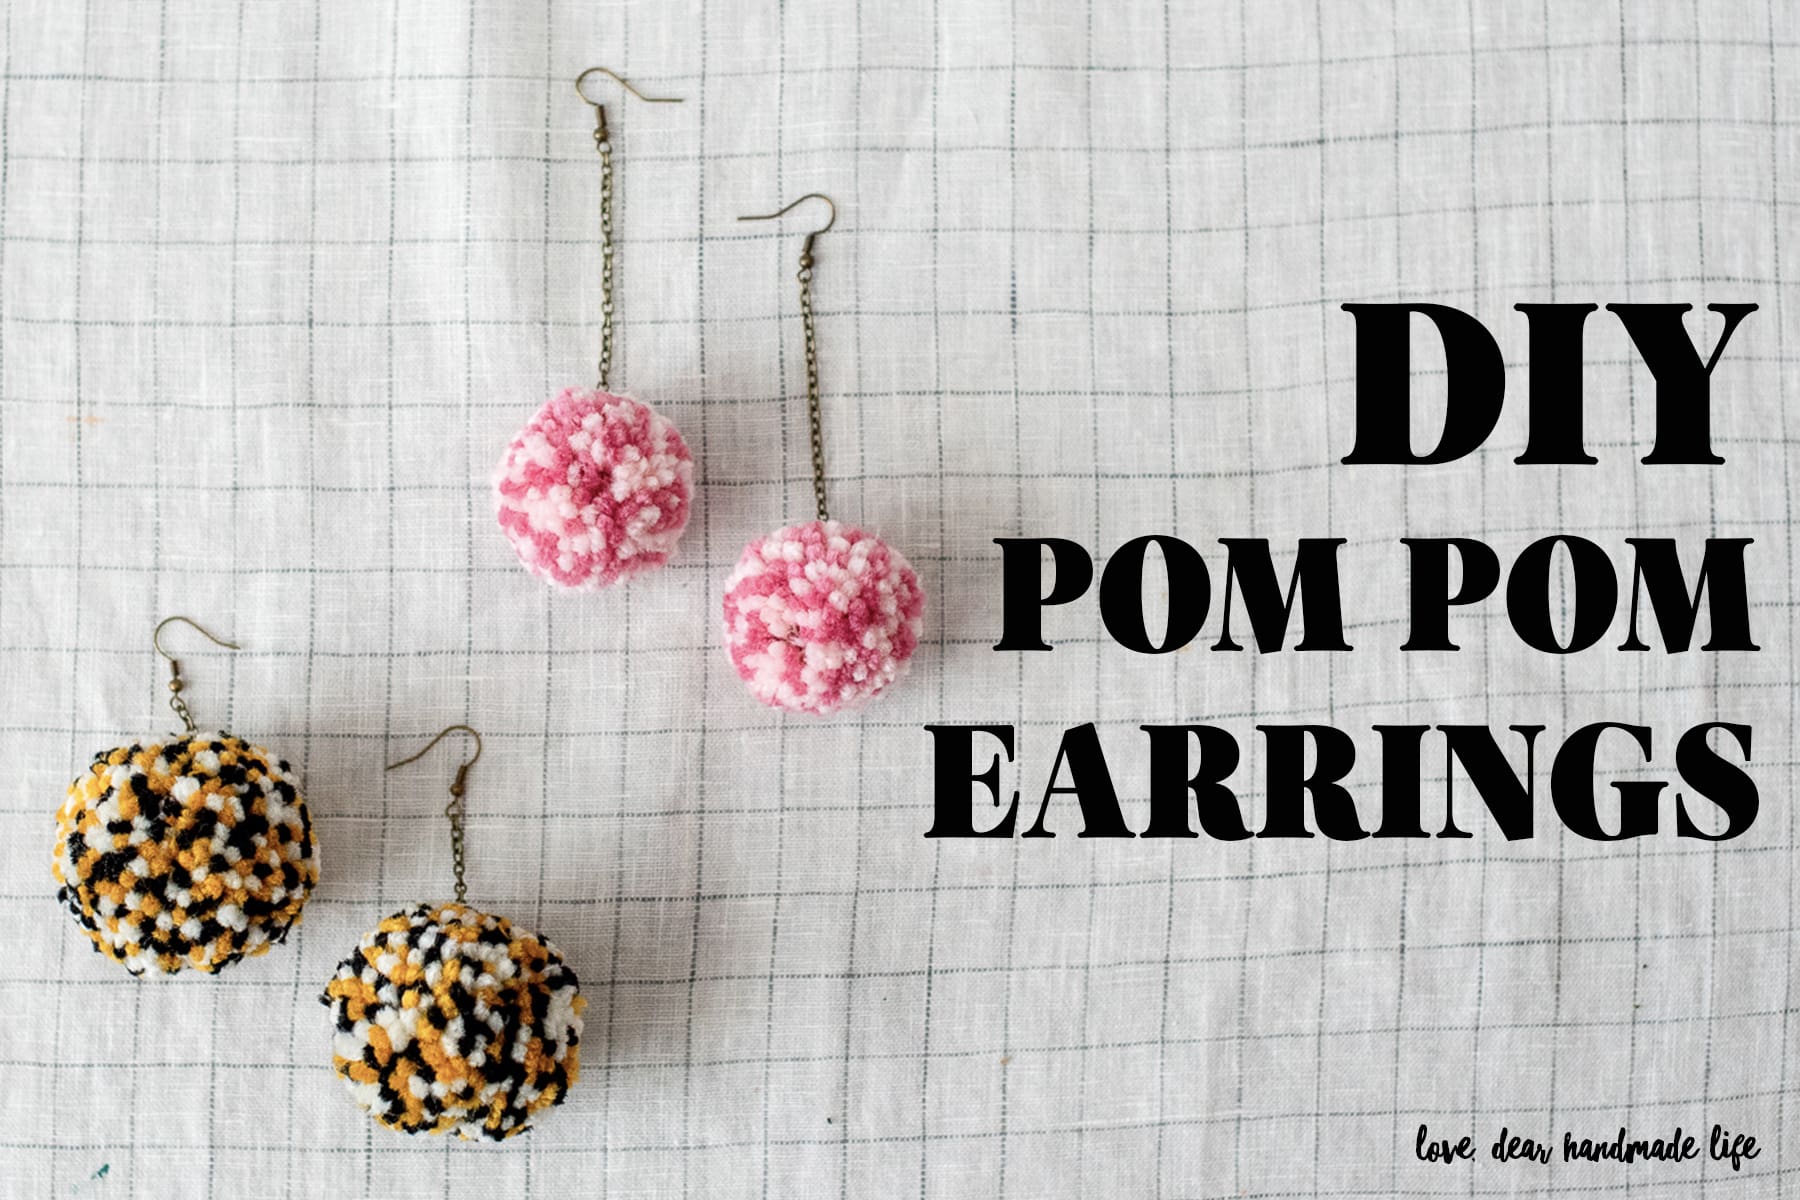 DIY pom pom earrings Dear Handmade Life